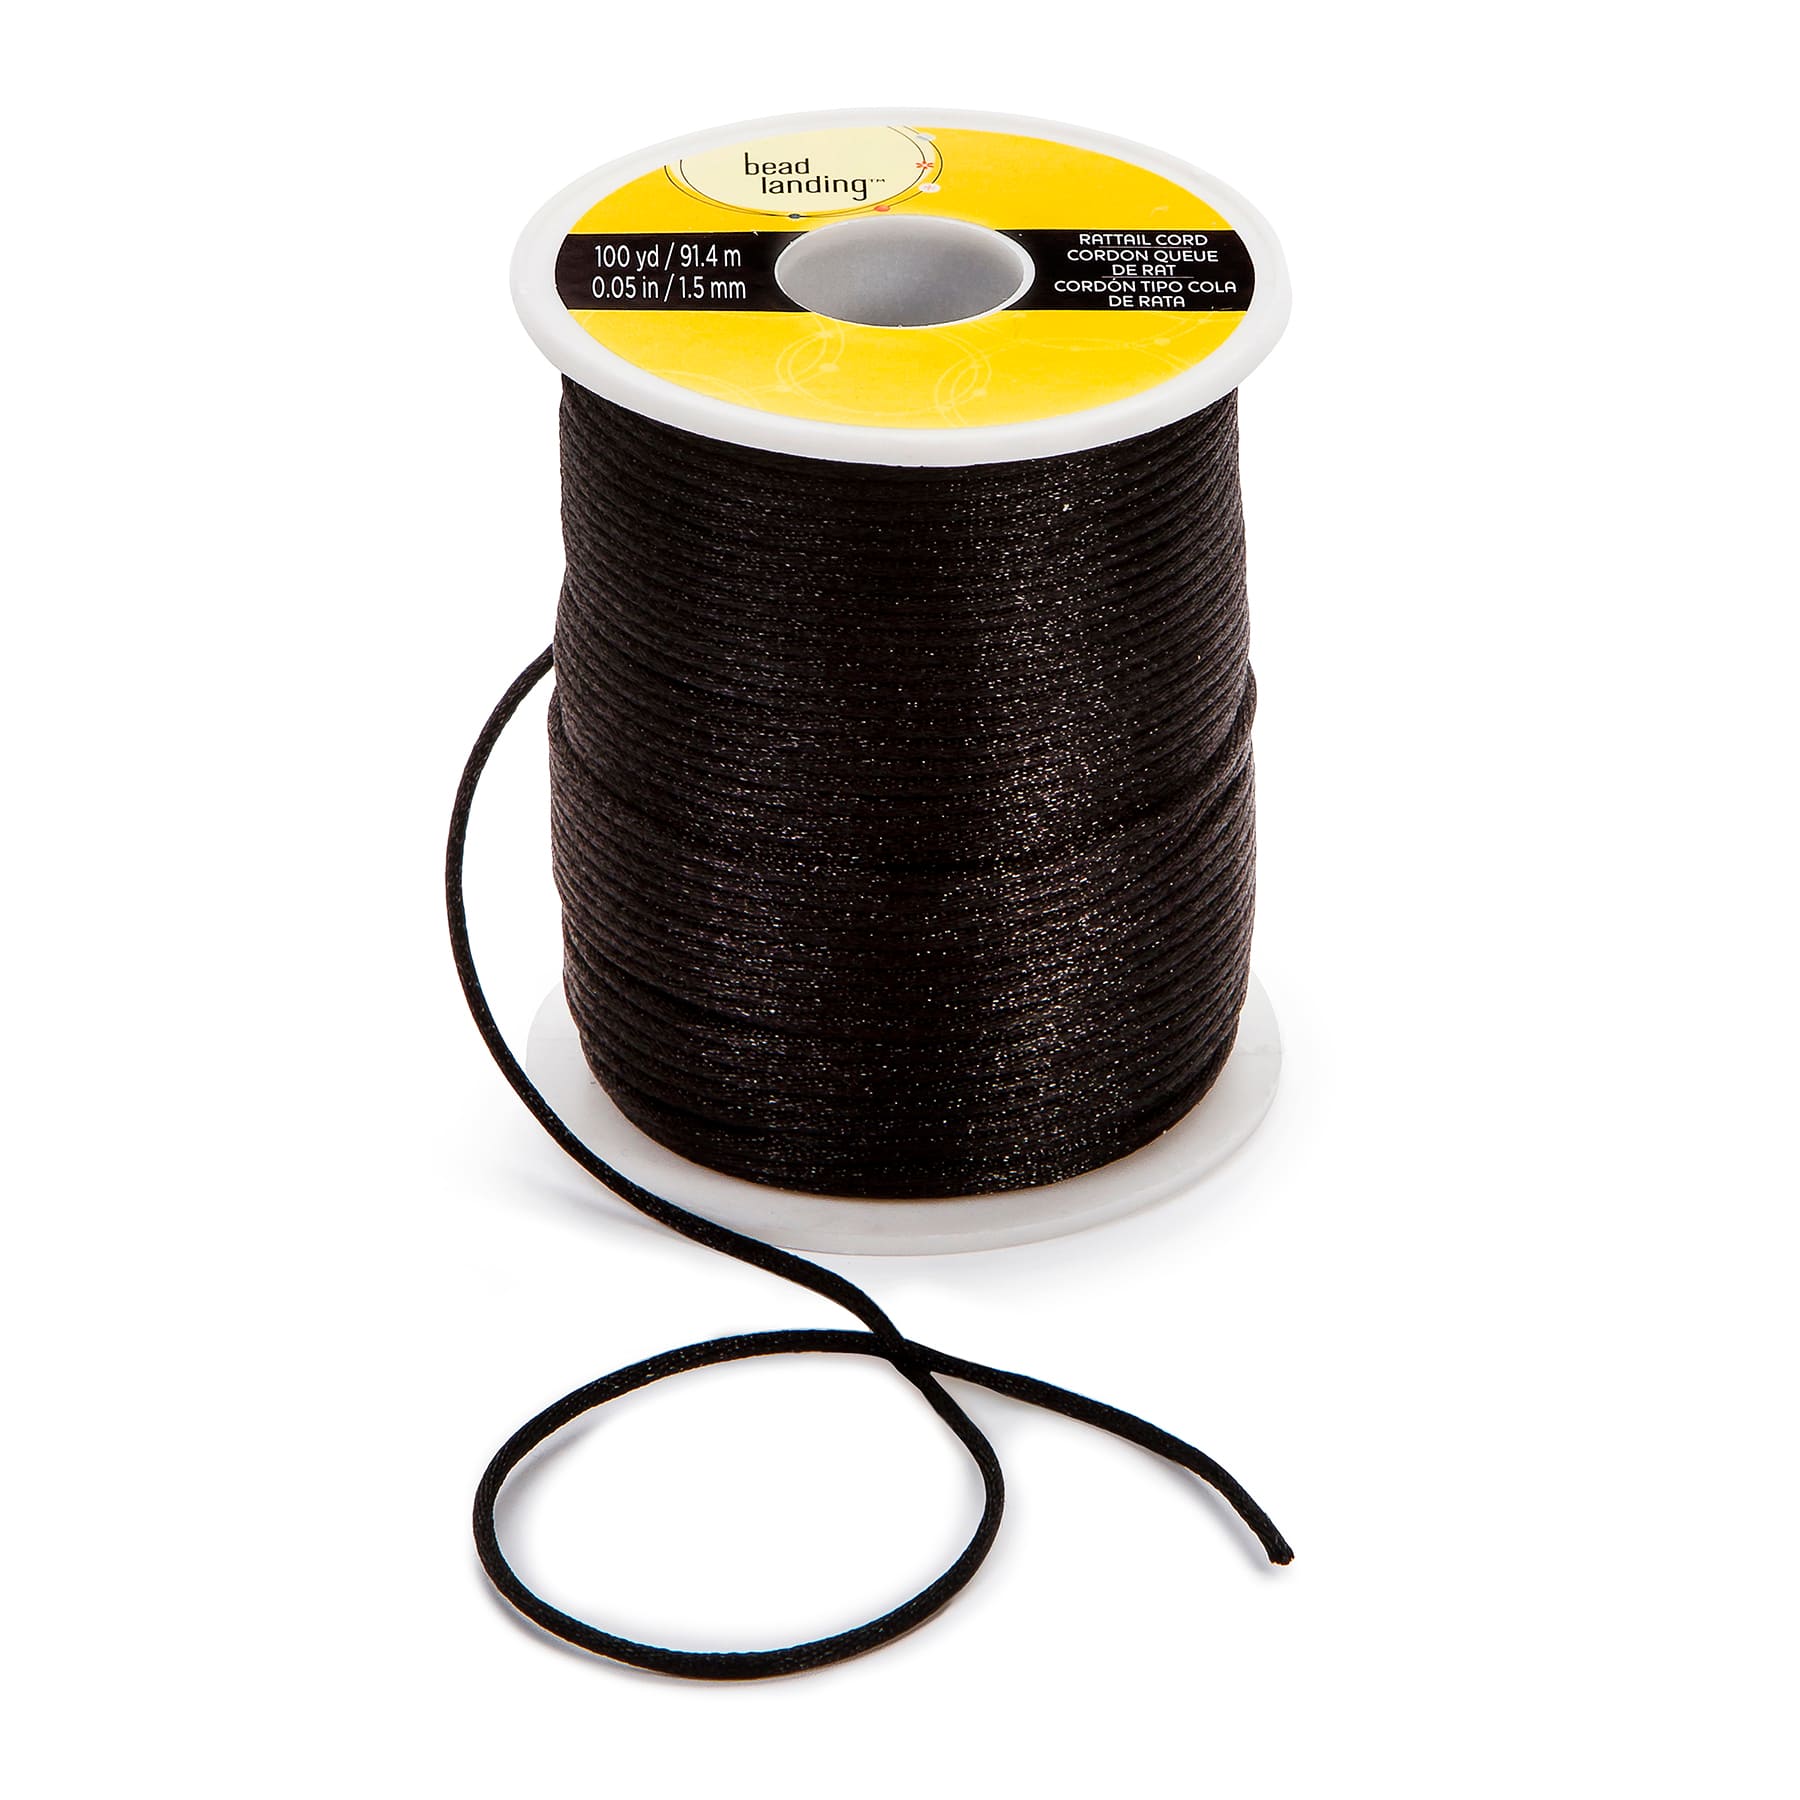 Buy Black Rattail Silk Cord, 144 Yards at S&S Worldwide